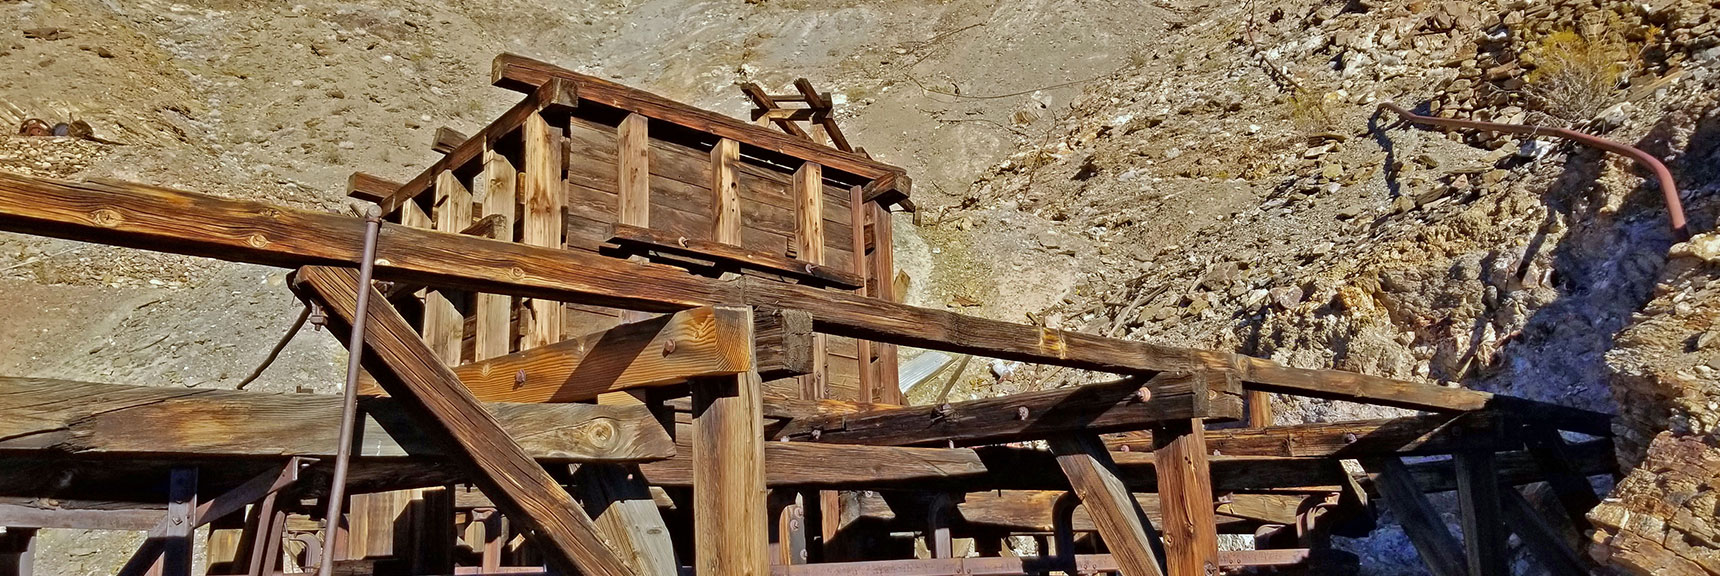 Upper Stamp Mill | Keane Wonder Mine | Death Valley National Park, California